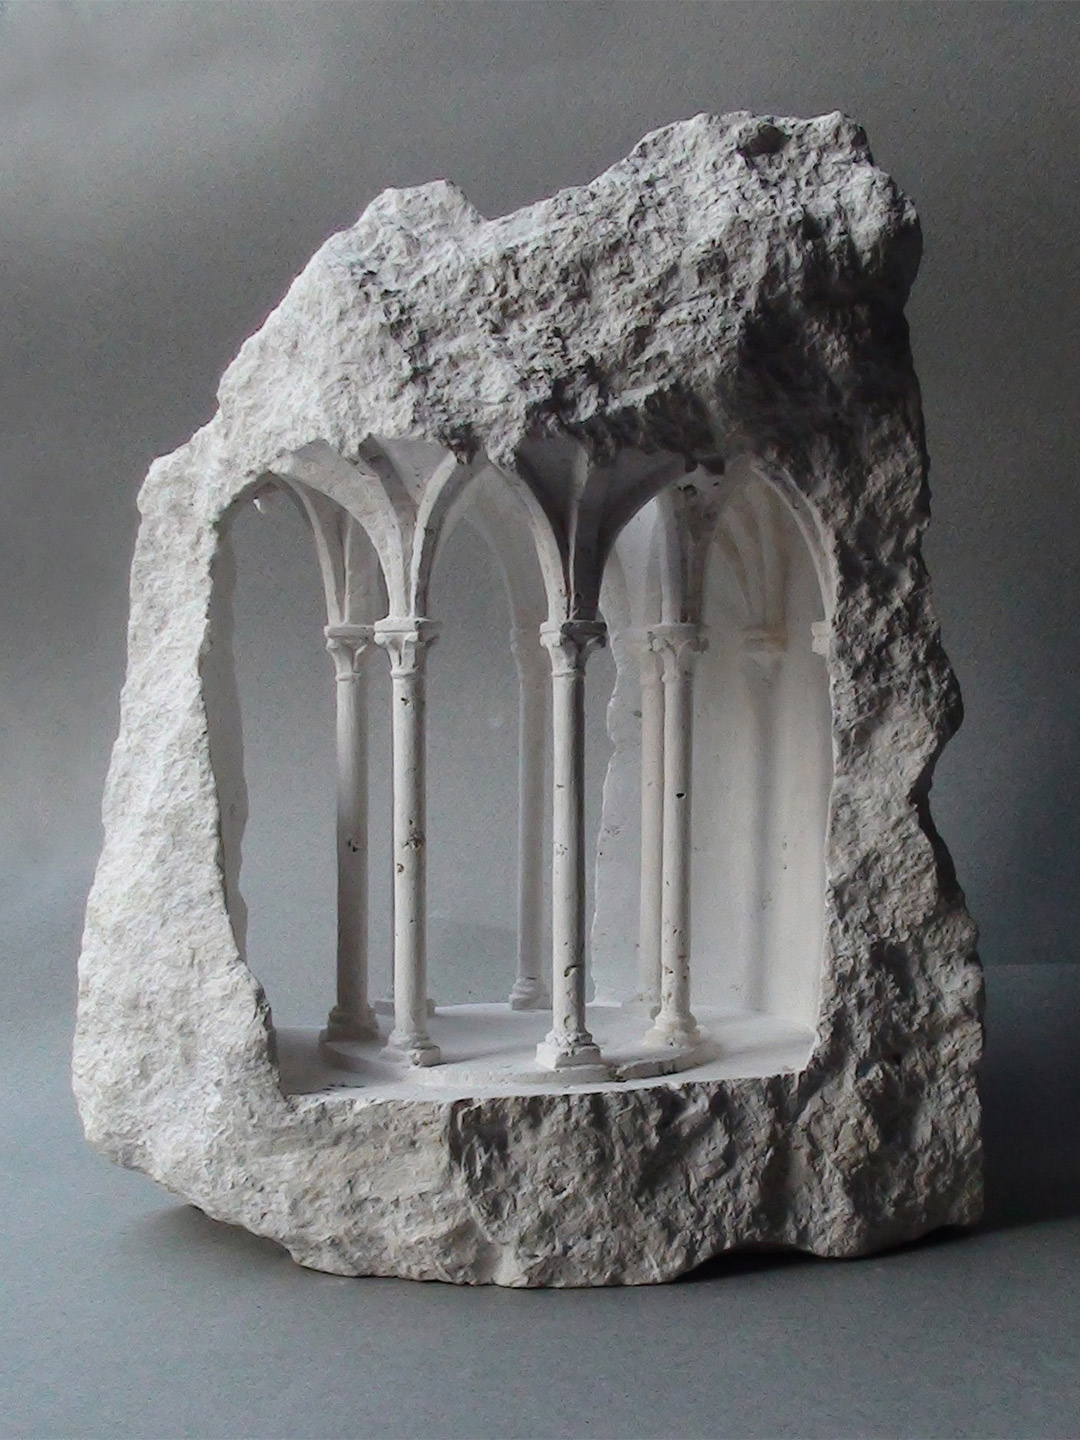 Stone sculpture by Matthew Simmonds